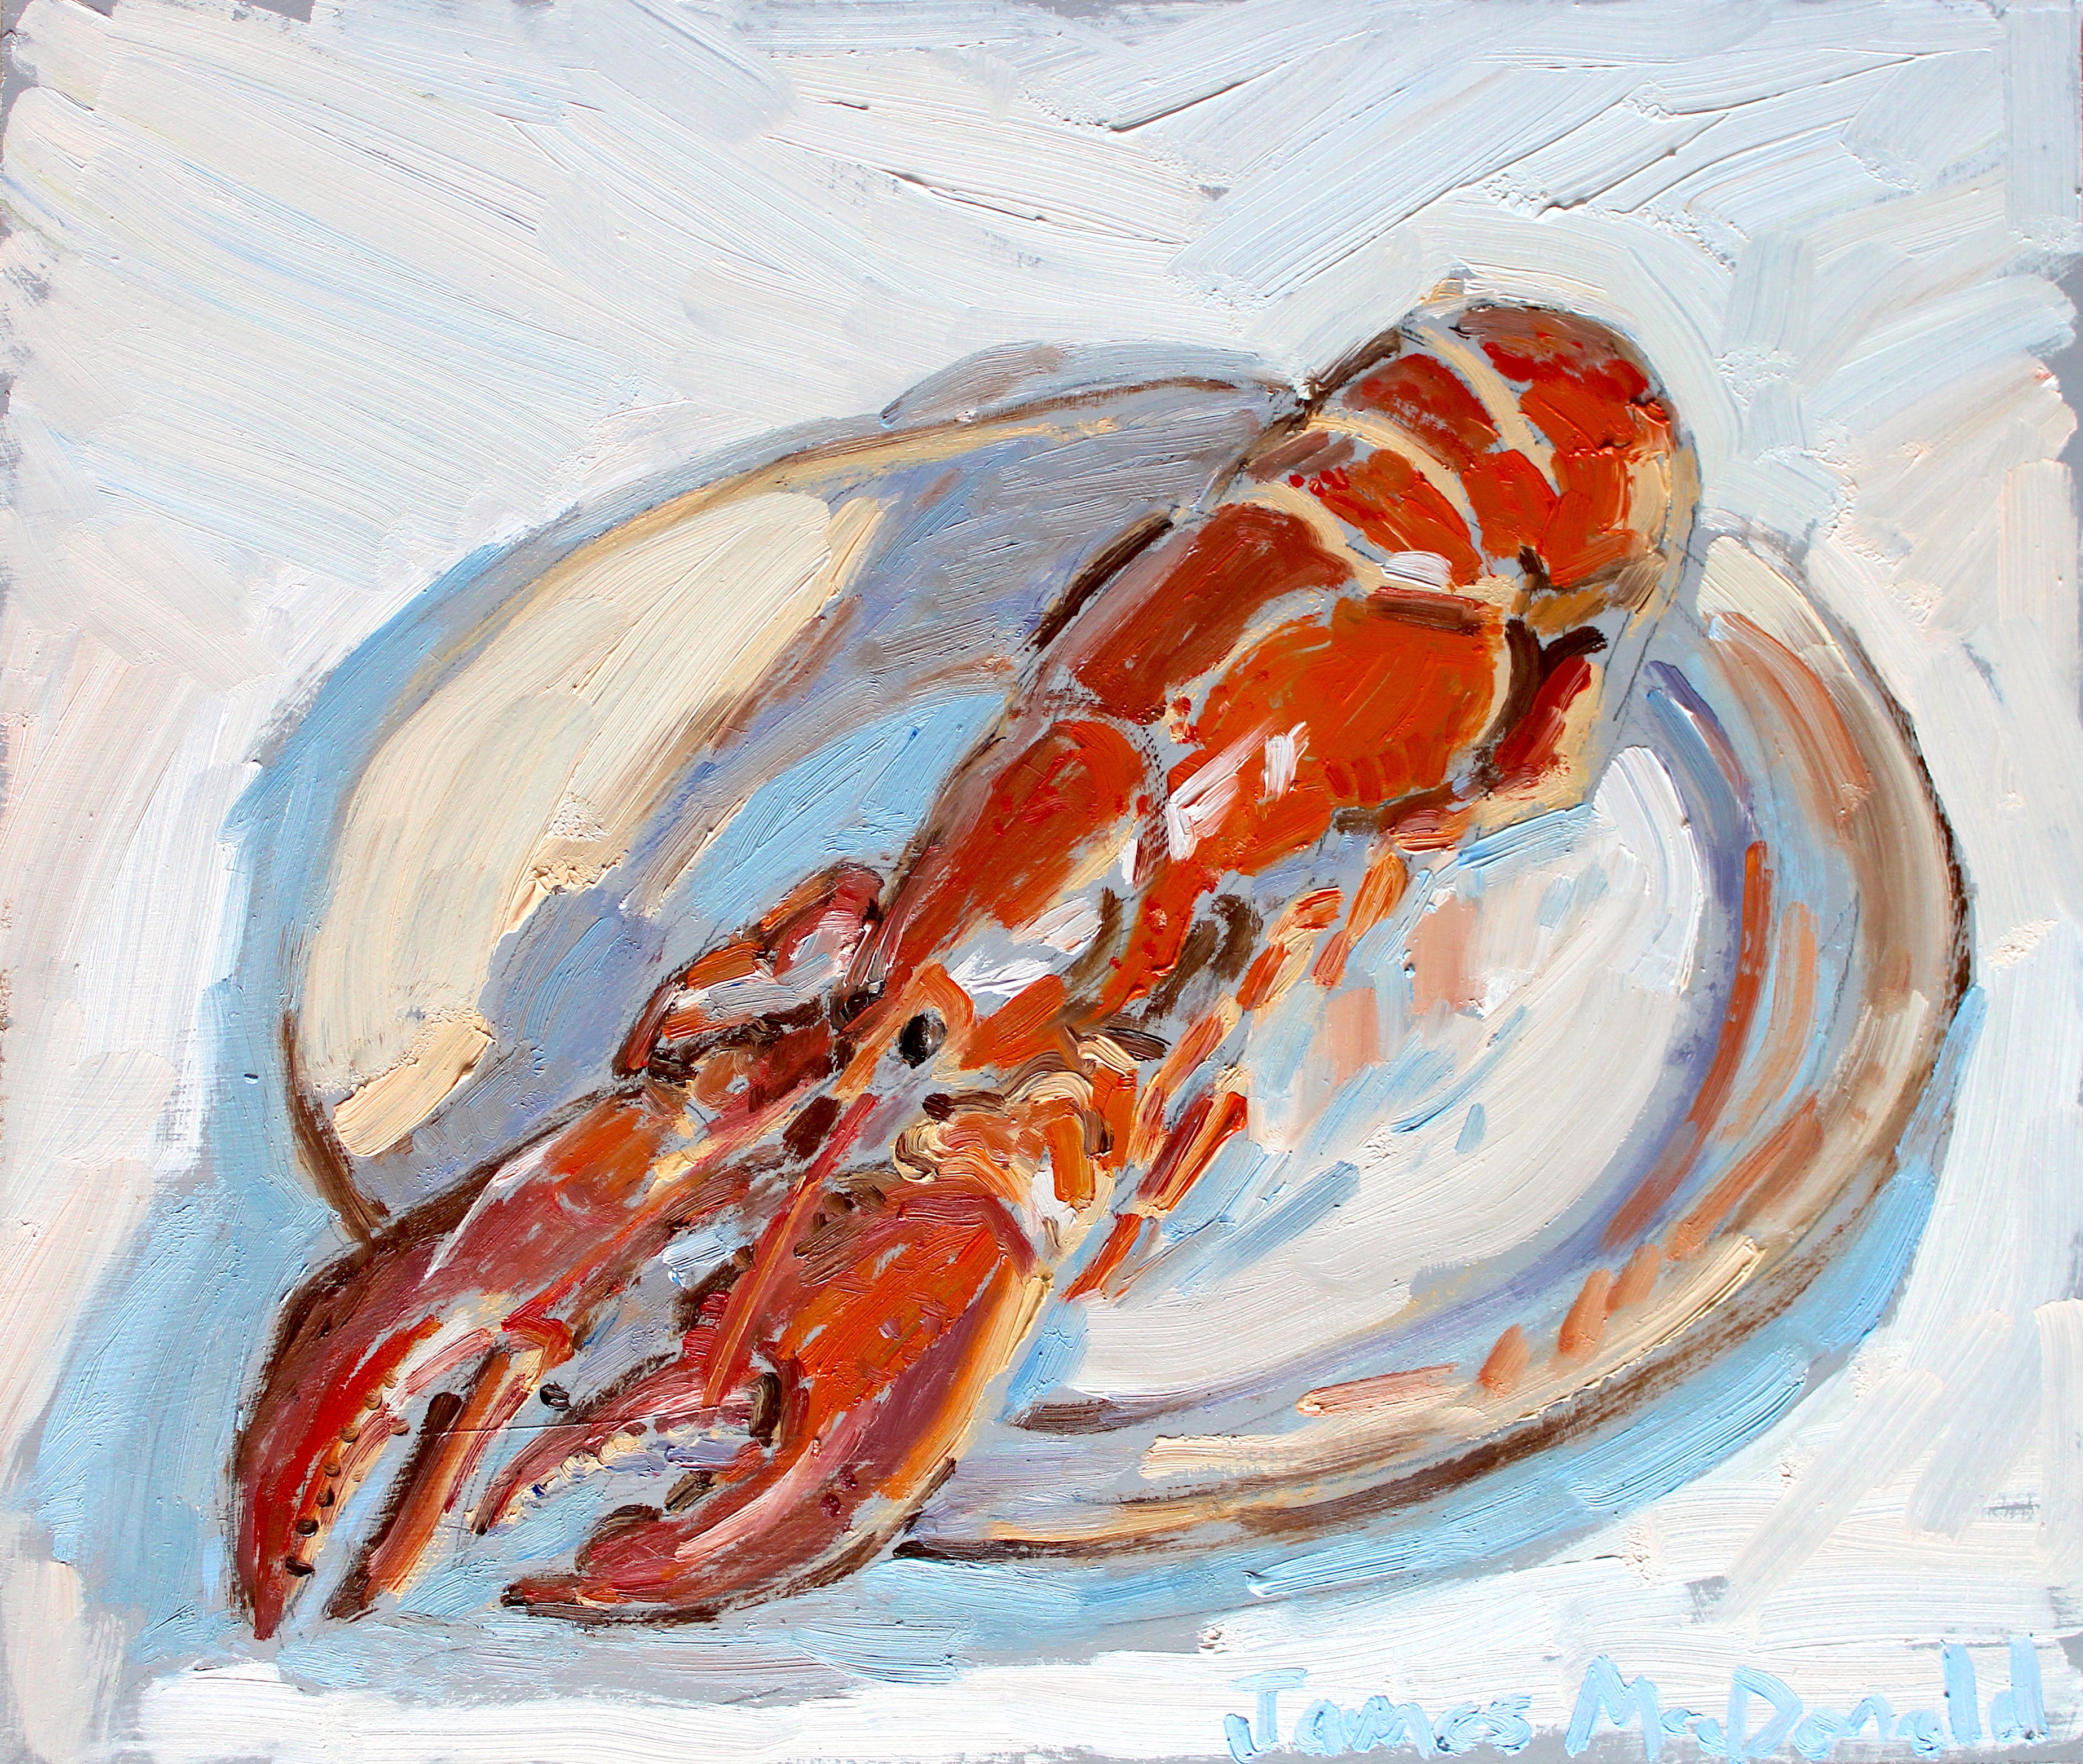 'Lobster' by artist James MacDonald